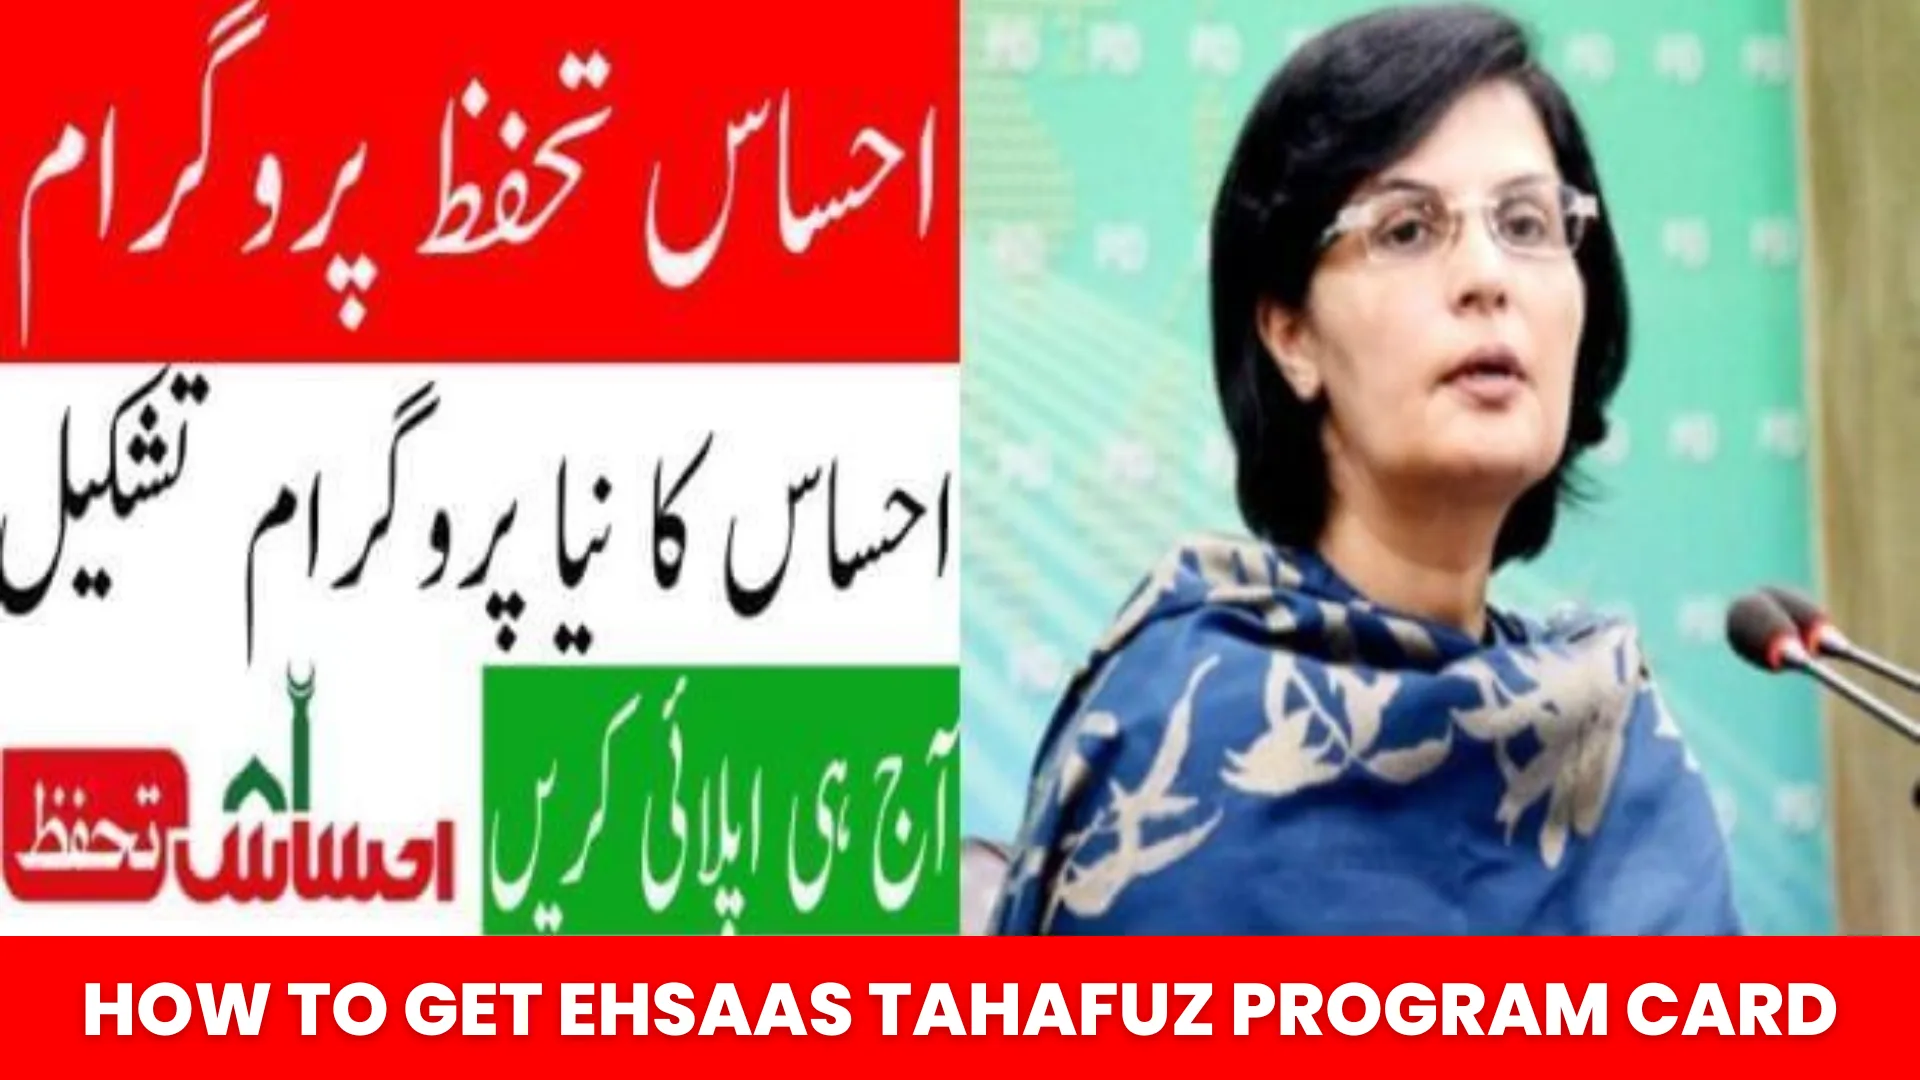 How to get Ehsaas Tahafuz program card